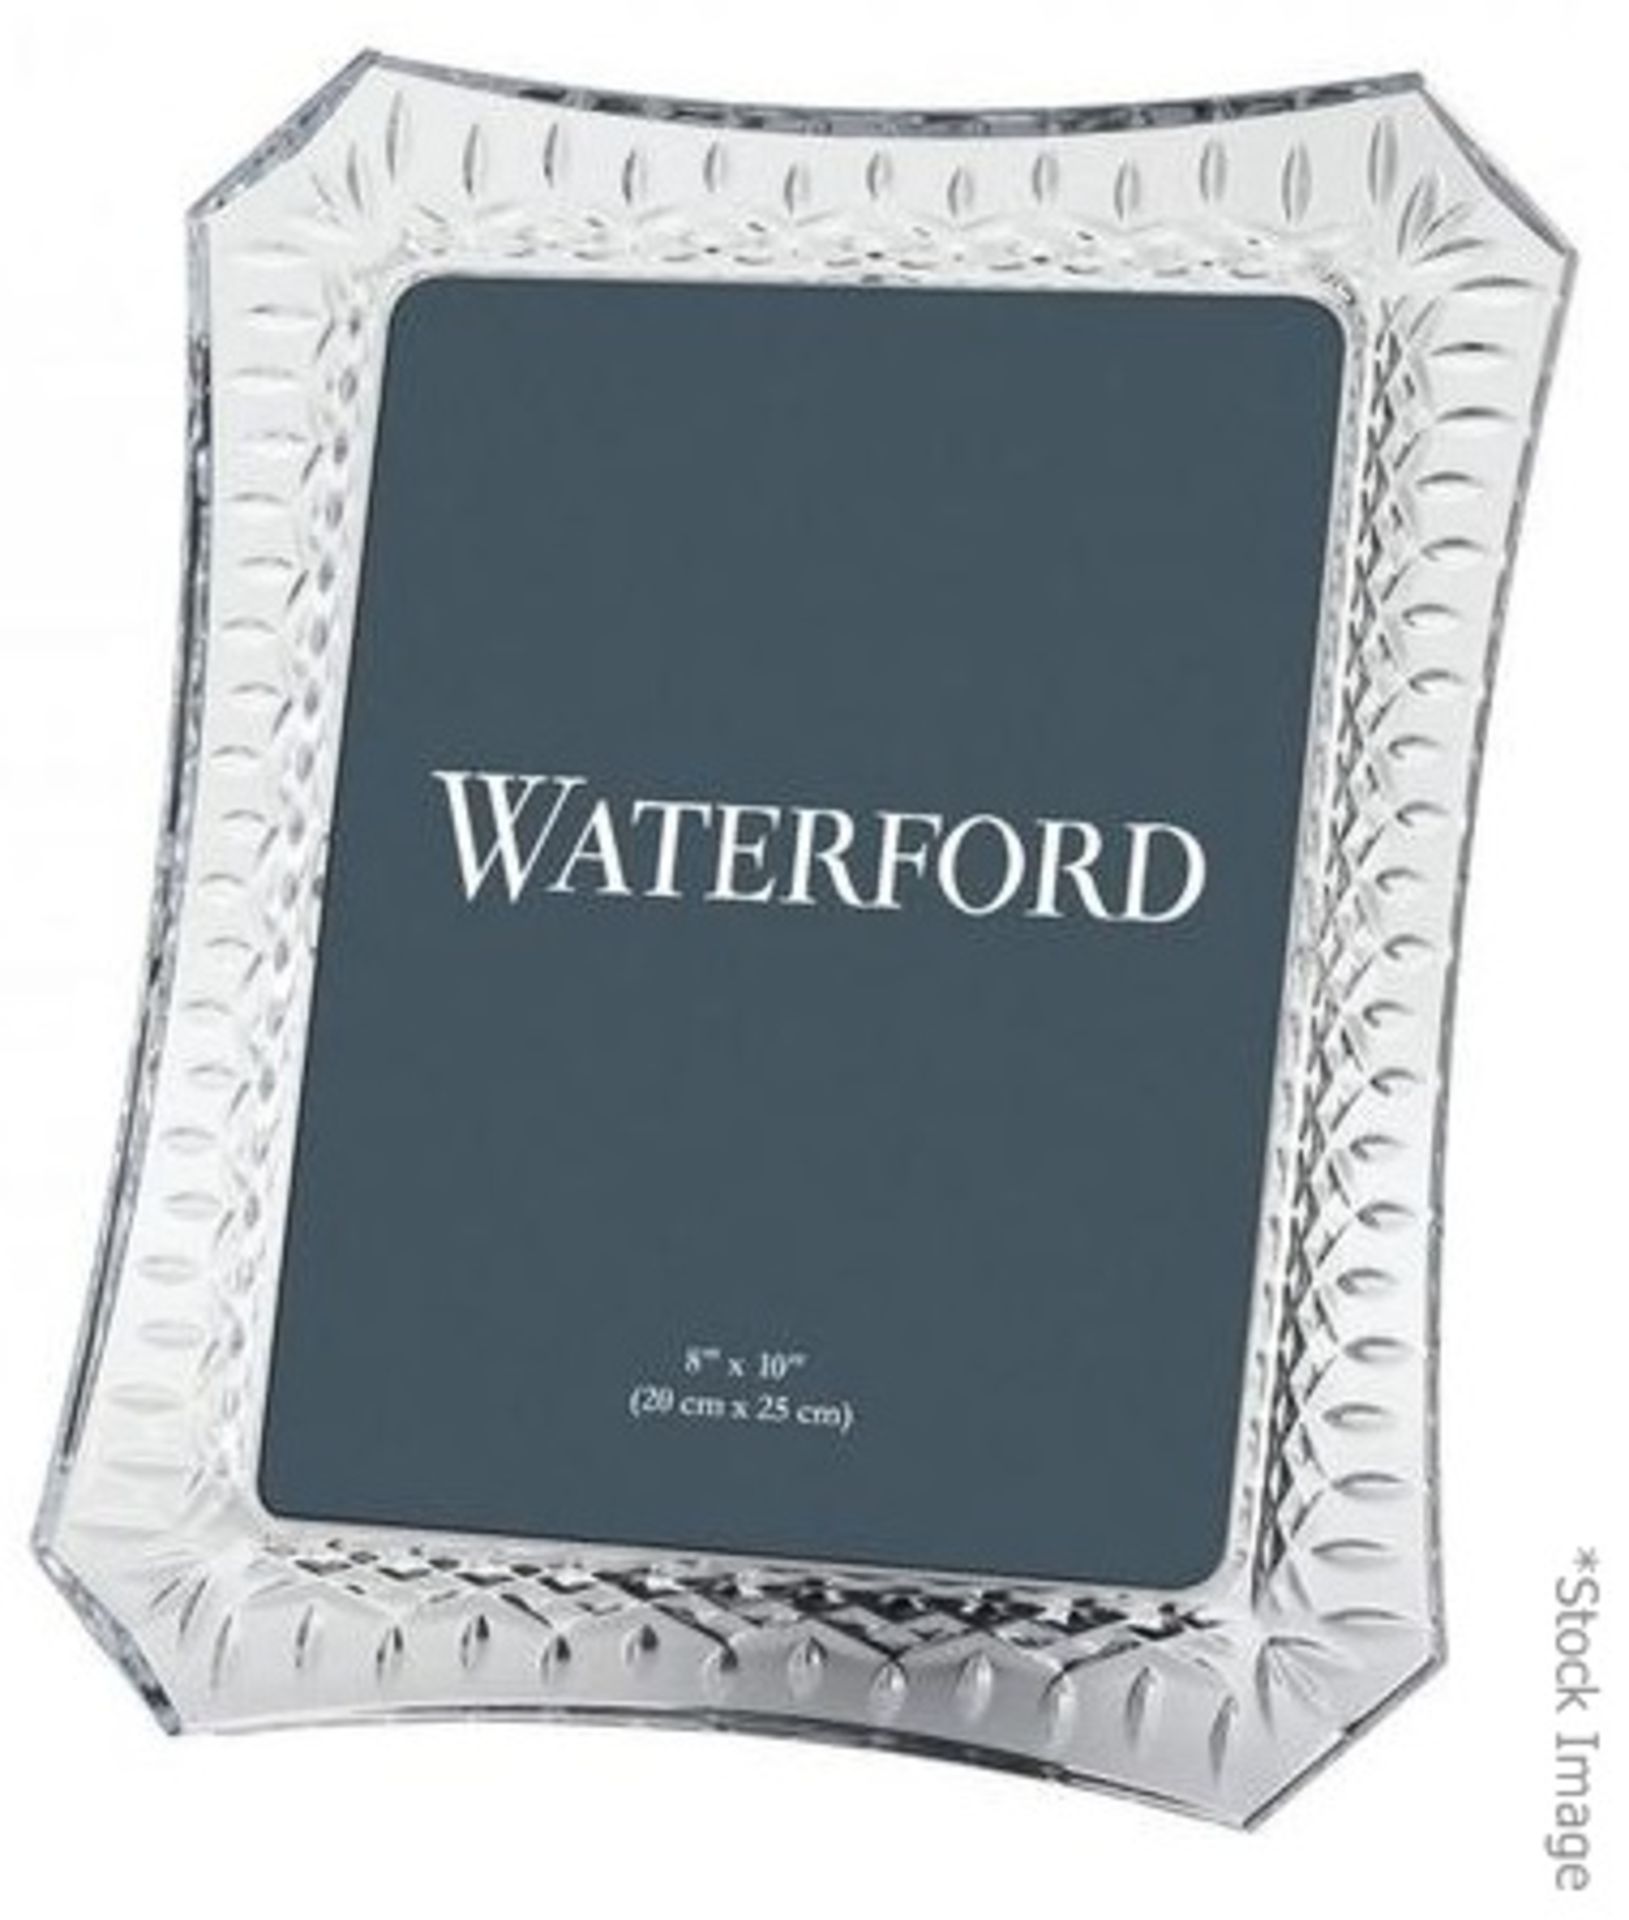 1 x Waterford 'Lismore' Crystal 8 x 10 Large Photo Frame - Original RRP £160.00 - Read Description